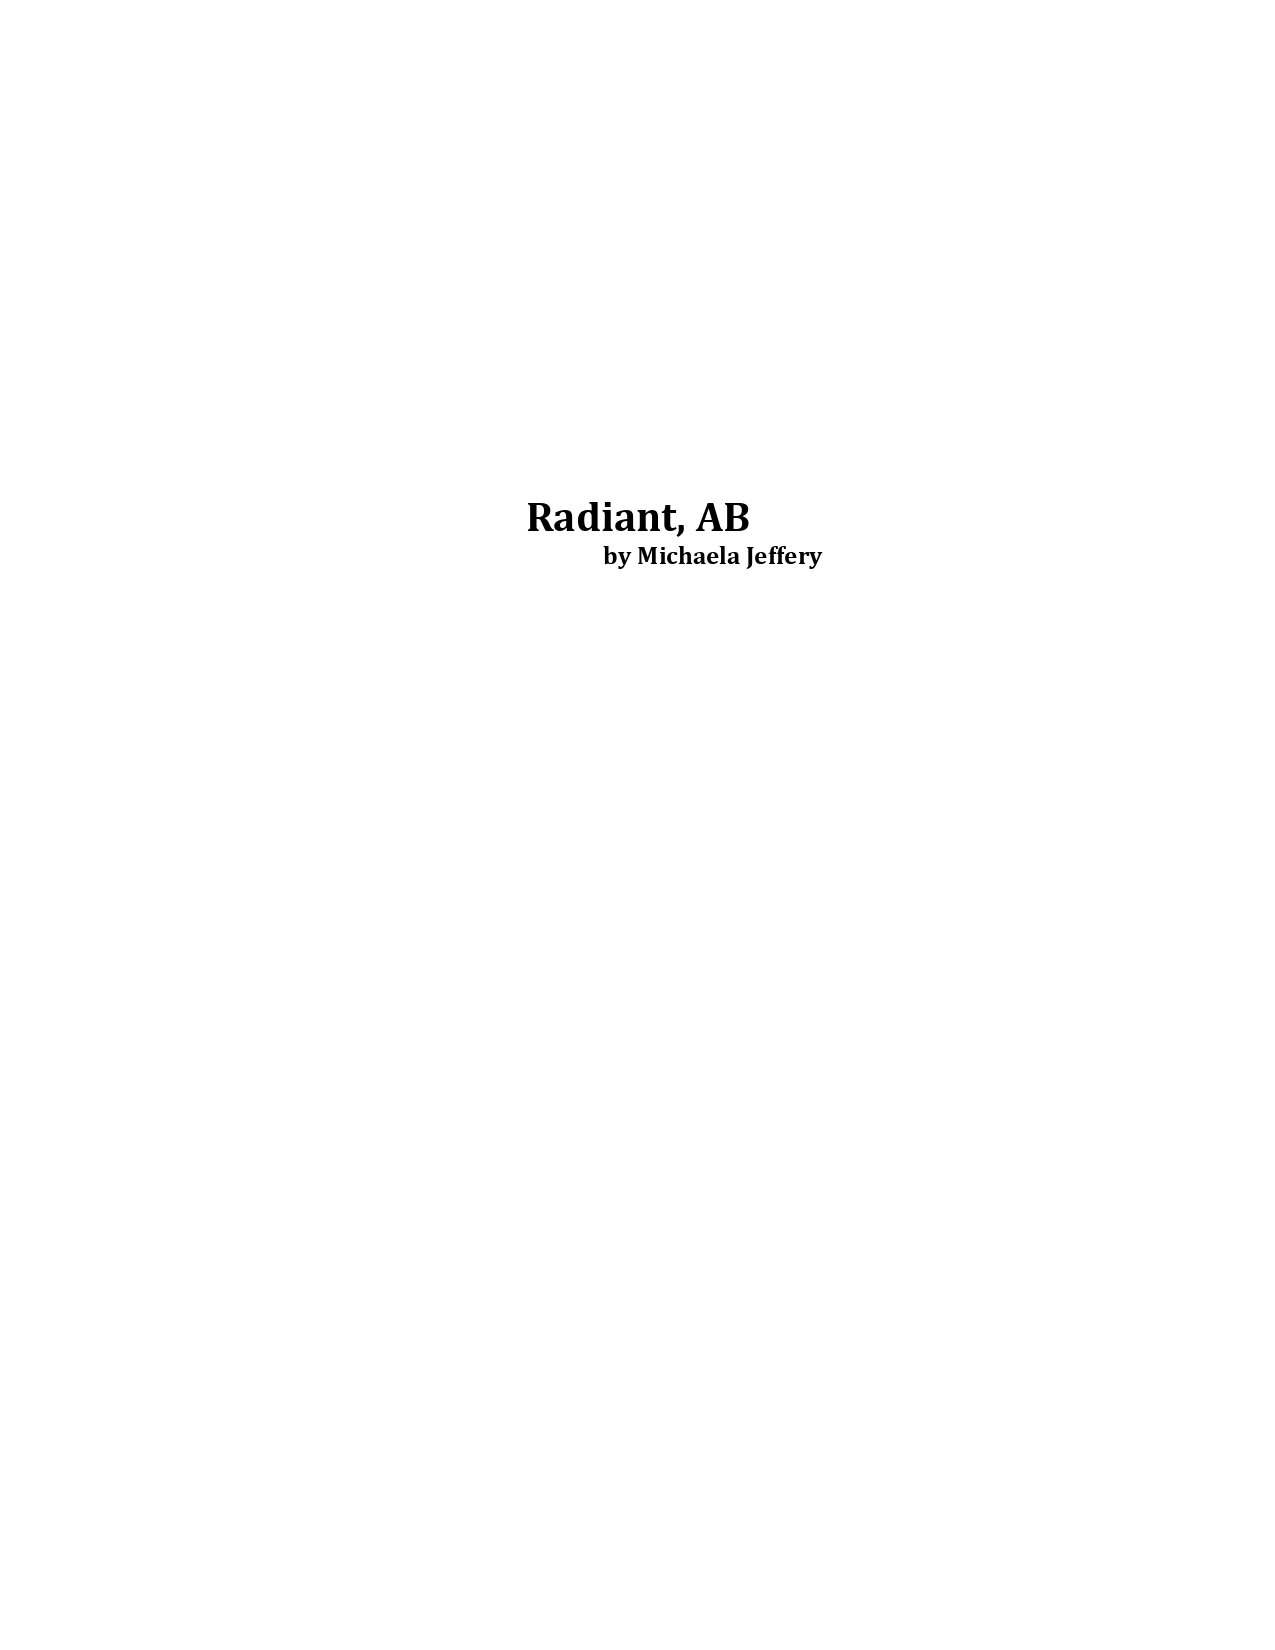 Radiant, Alberta - Archival PDF_page-0001.jpg